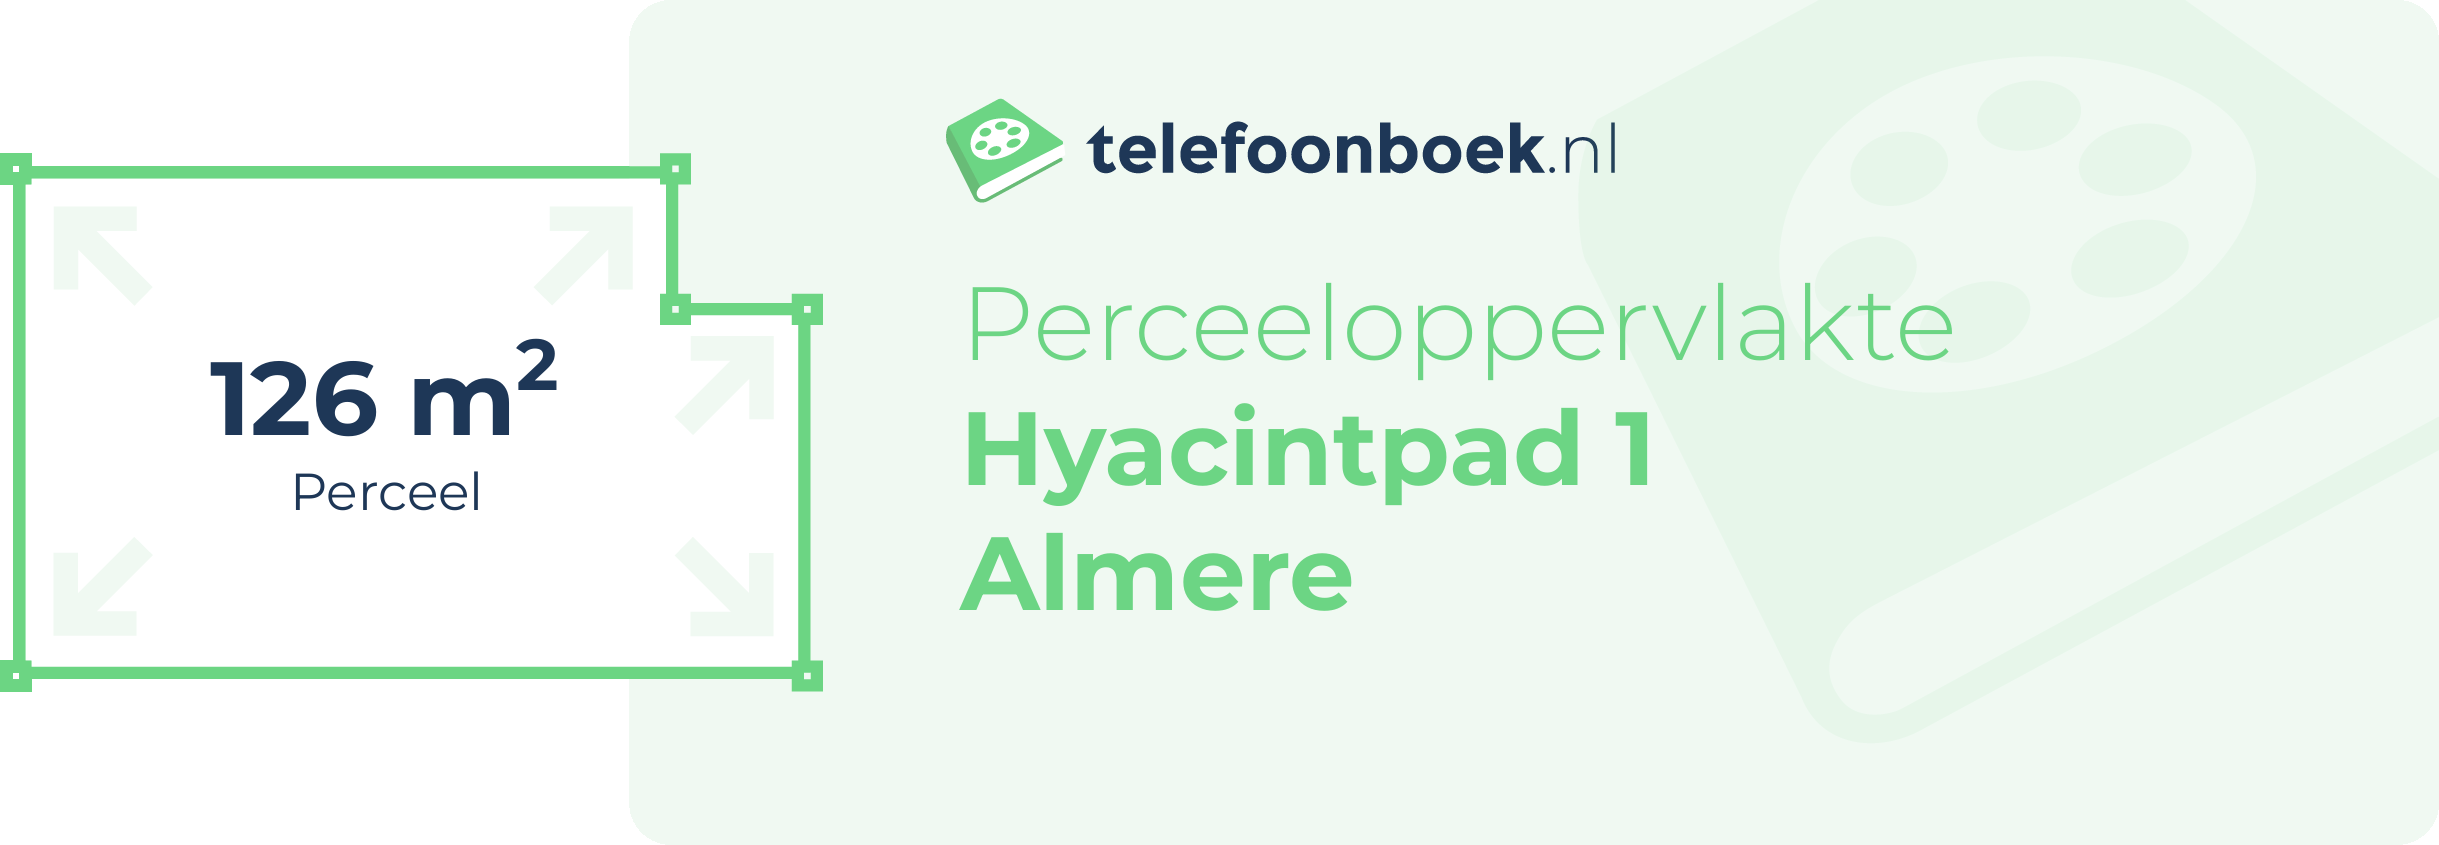 Perceeloppervlakte Hyacintpad 1 Almere